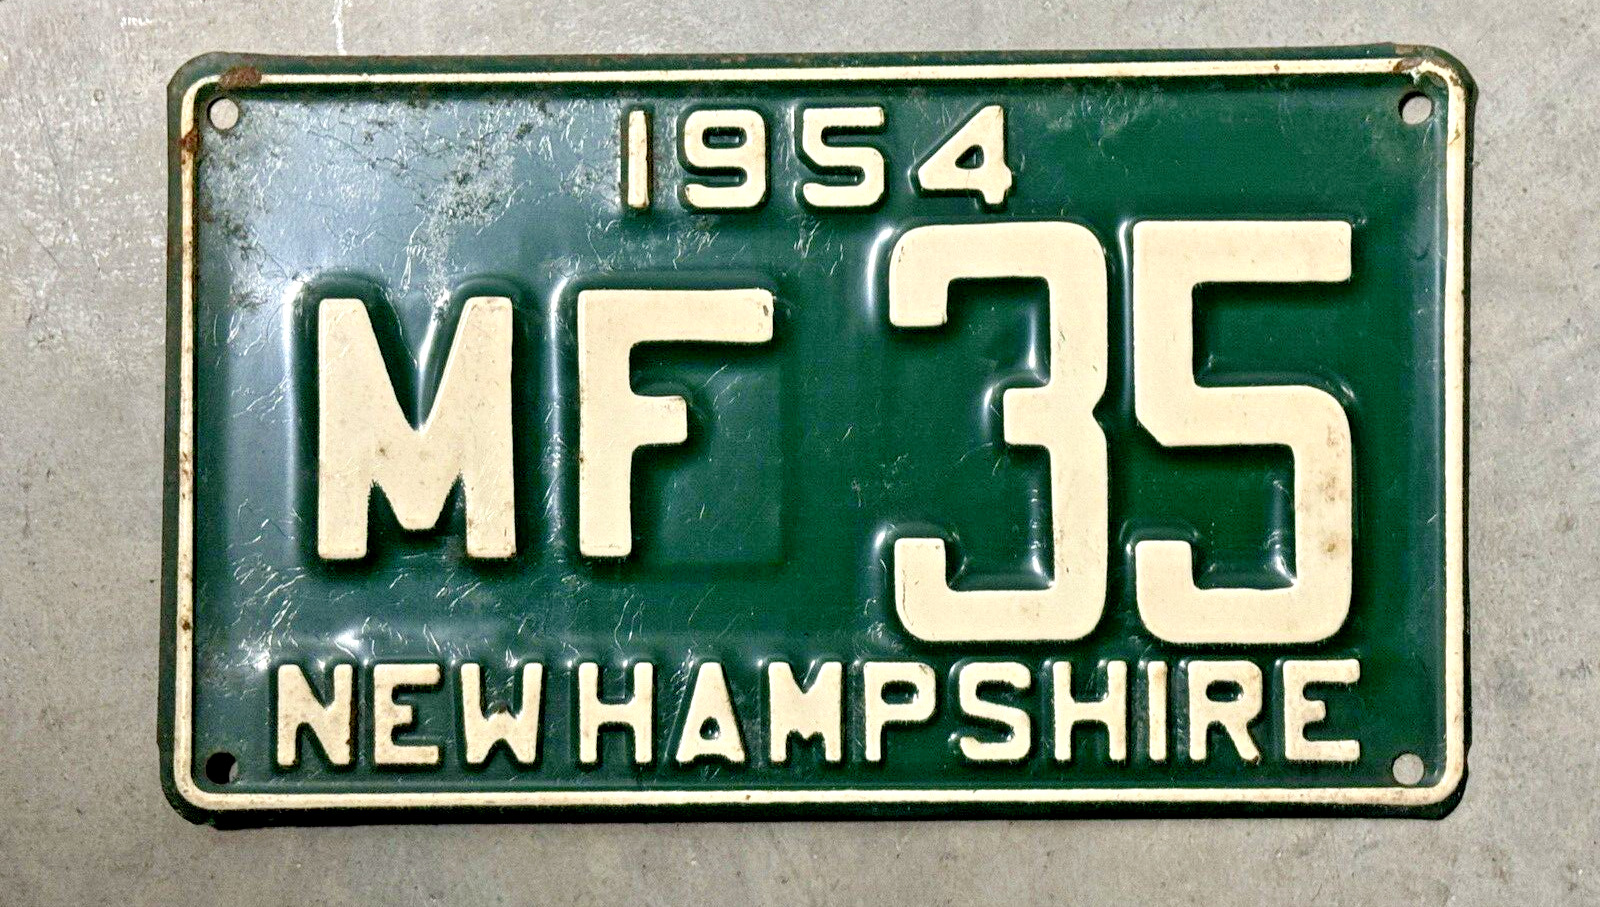 1954 NEW HAMPSHIRE license plate - BRILLIANT ORIGINAL vintage antique auto tag